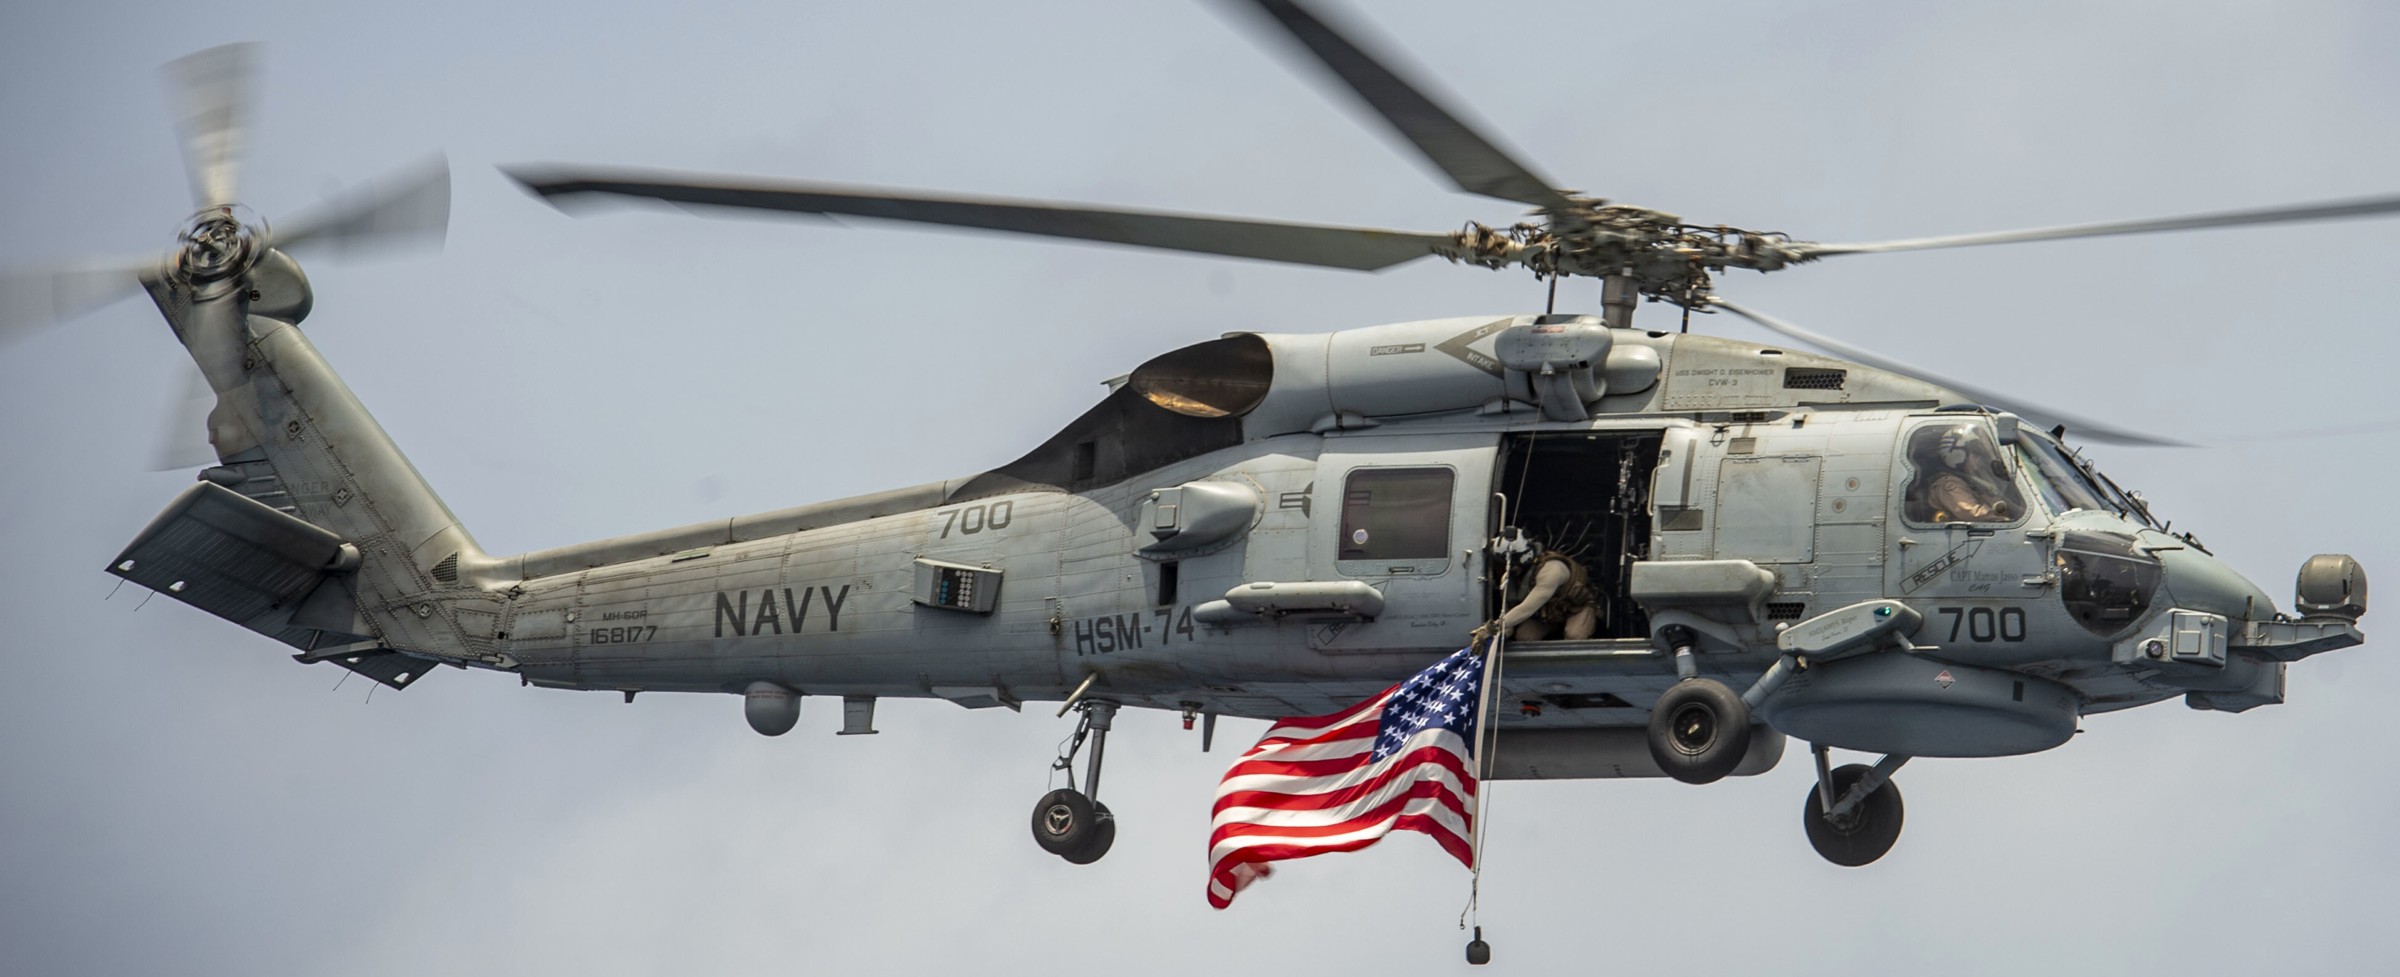 hsm-74 swamp foxes helicopter maritime strike squadron mh-60r seahawk cvw-3 cvn-69 uss dwight d. eisenhower 116